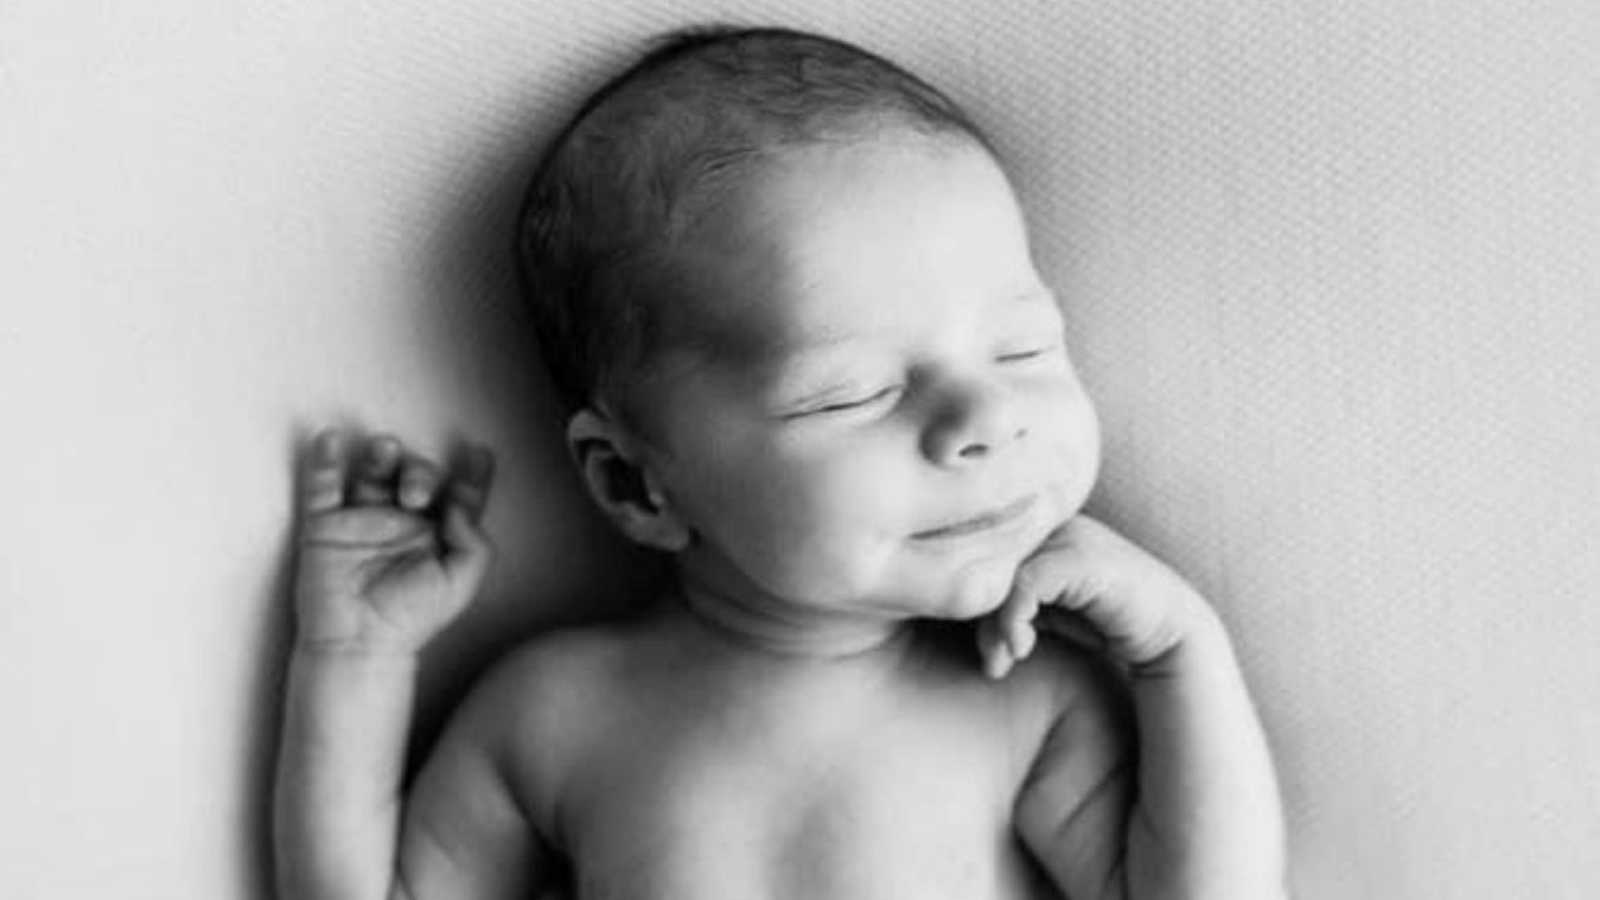 Newborn baby boy smiles in his sleep